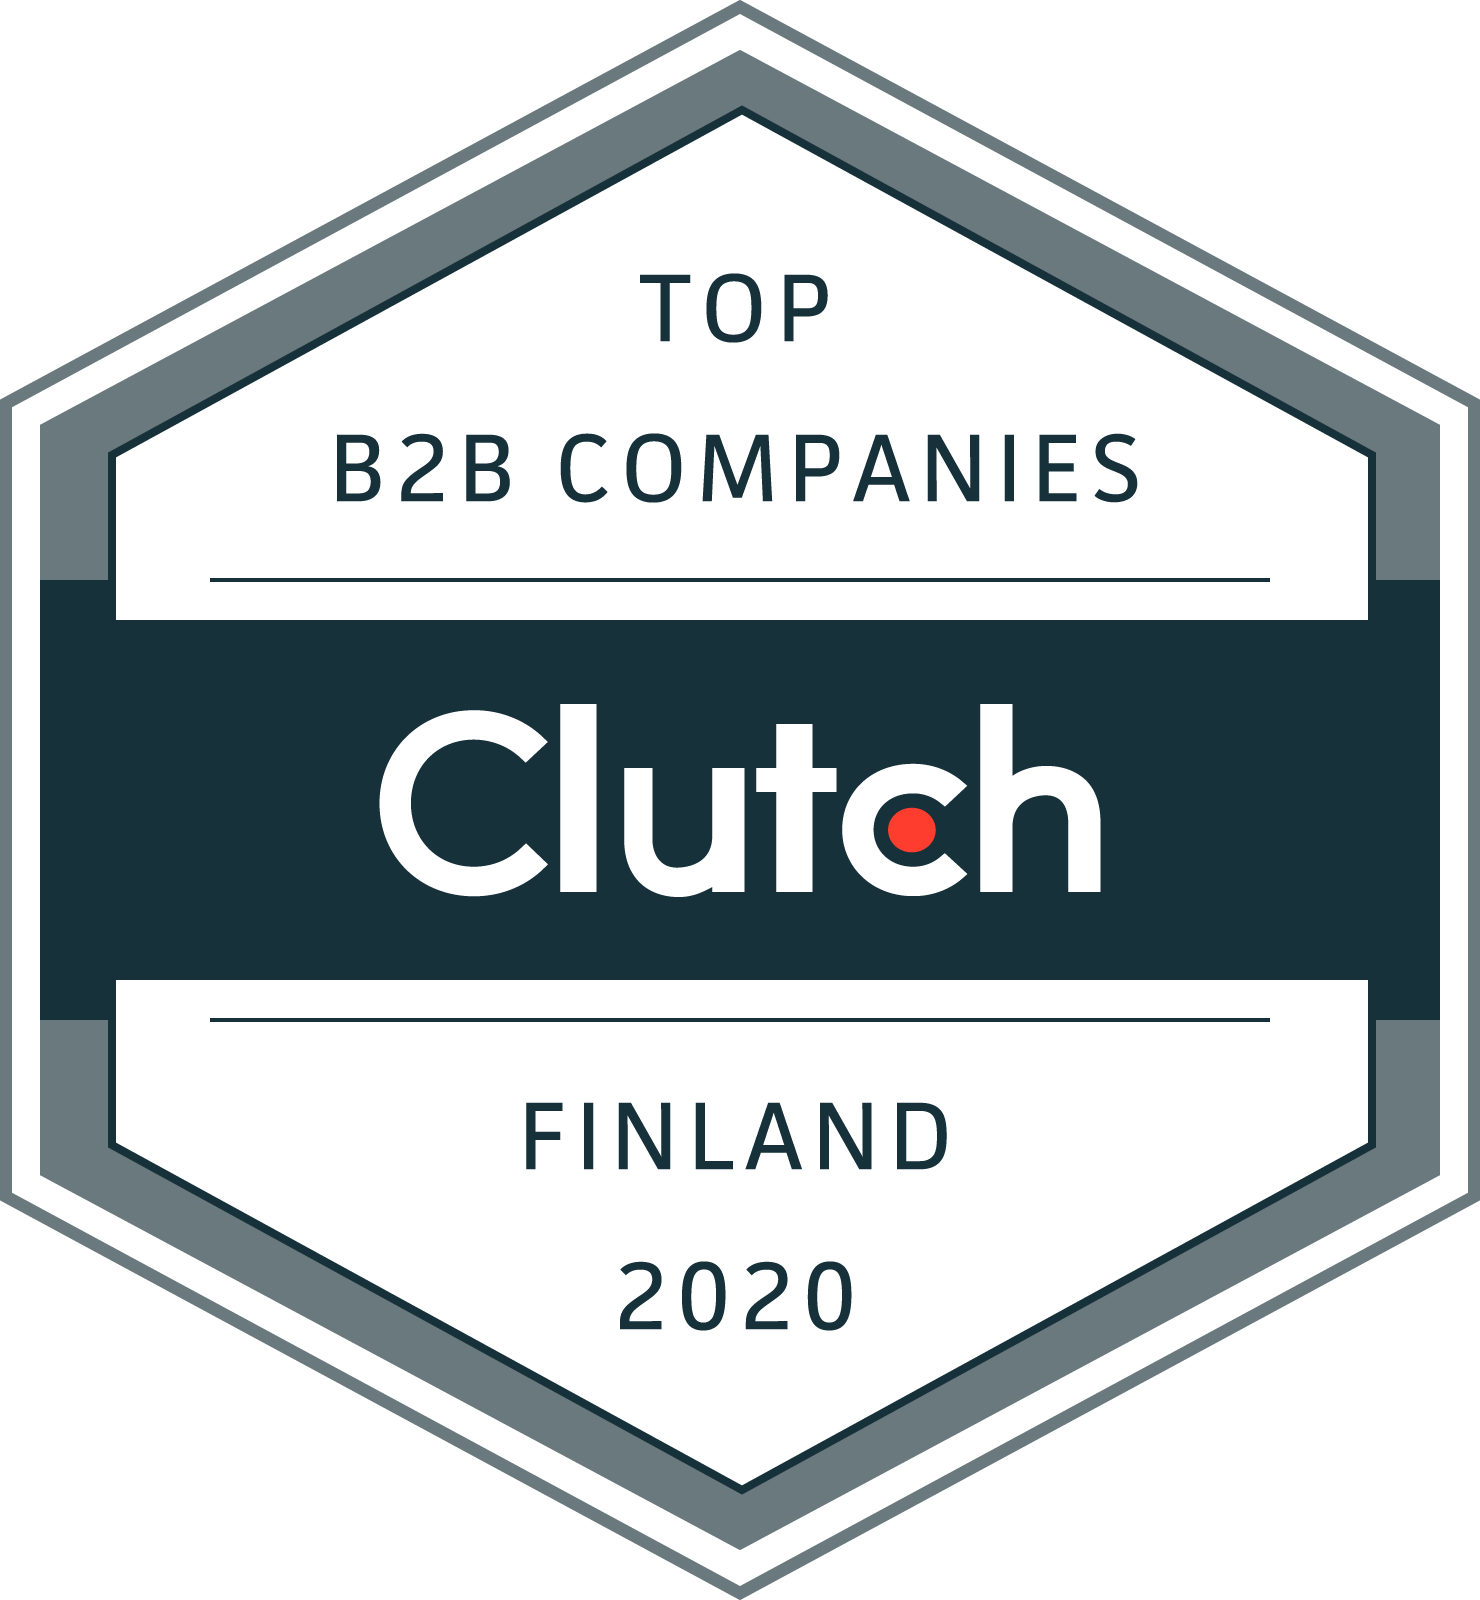 IWA - Top B2B Companies Finland 2020